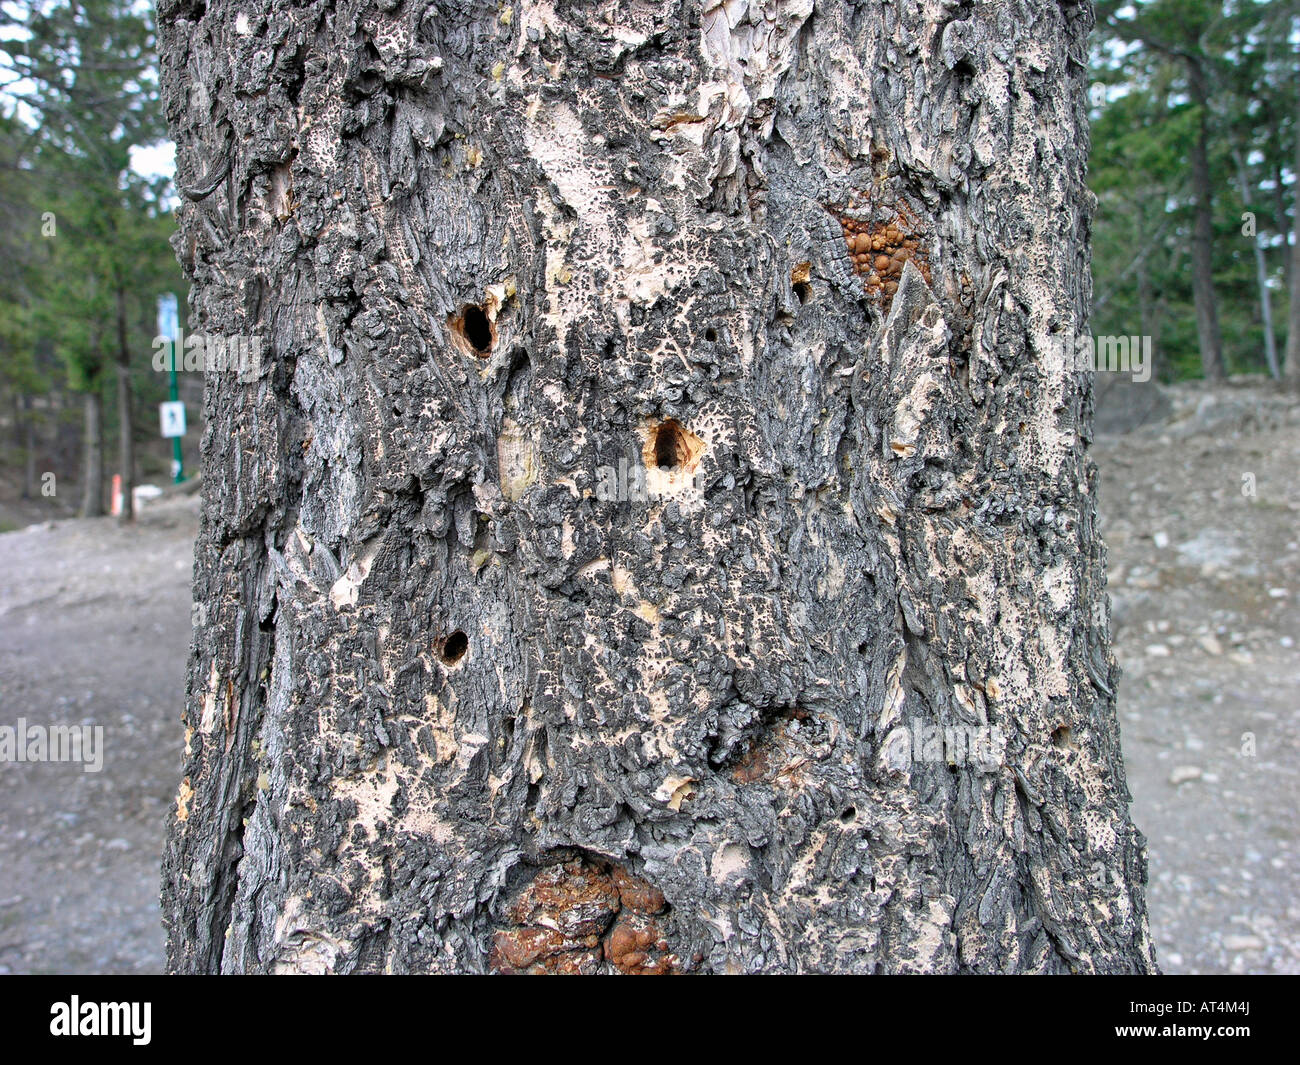 Mountain Pine beetle damage Stock Photo